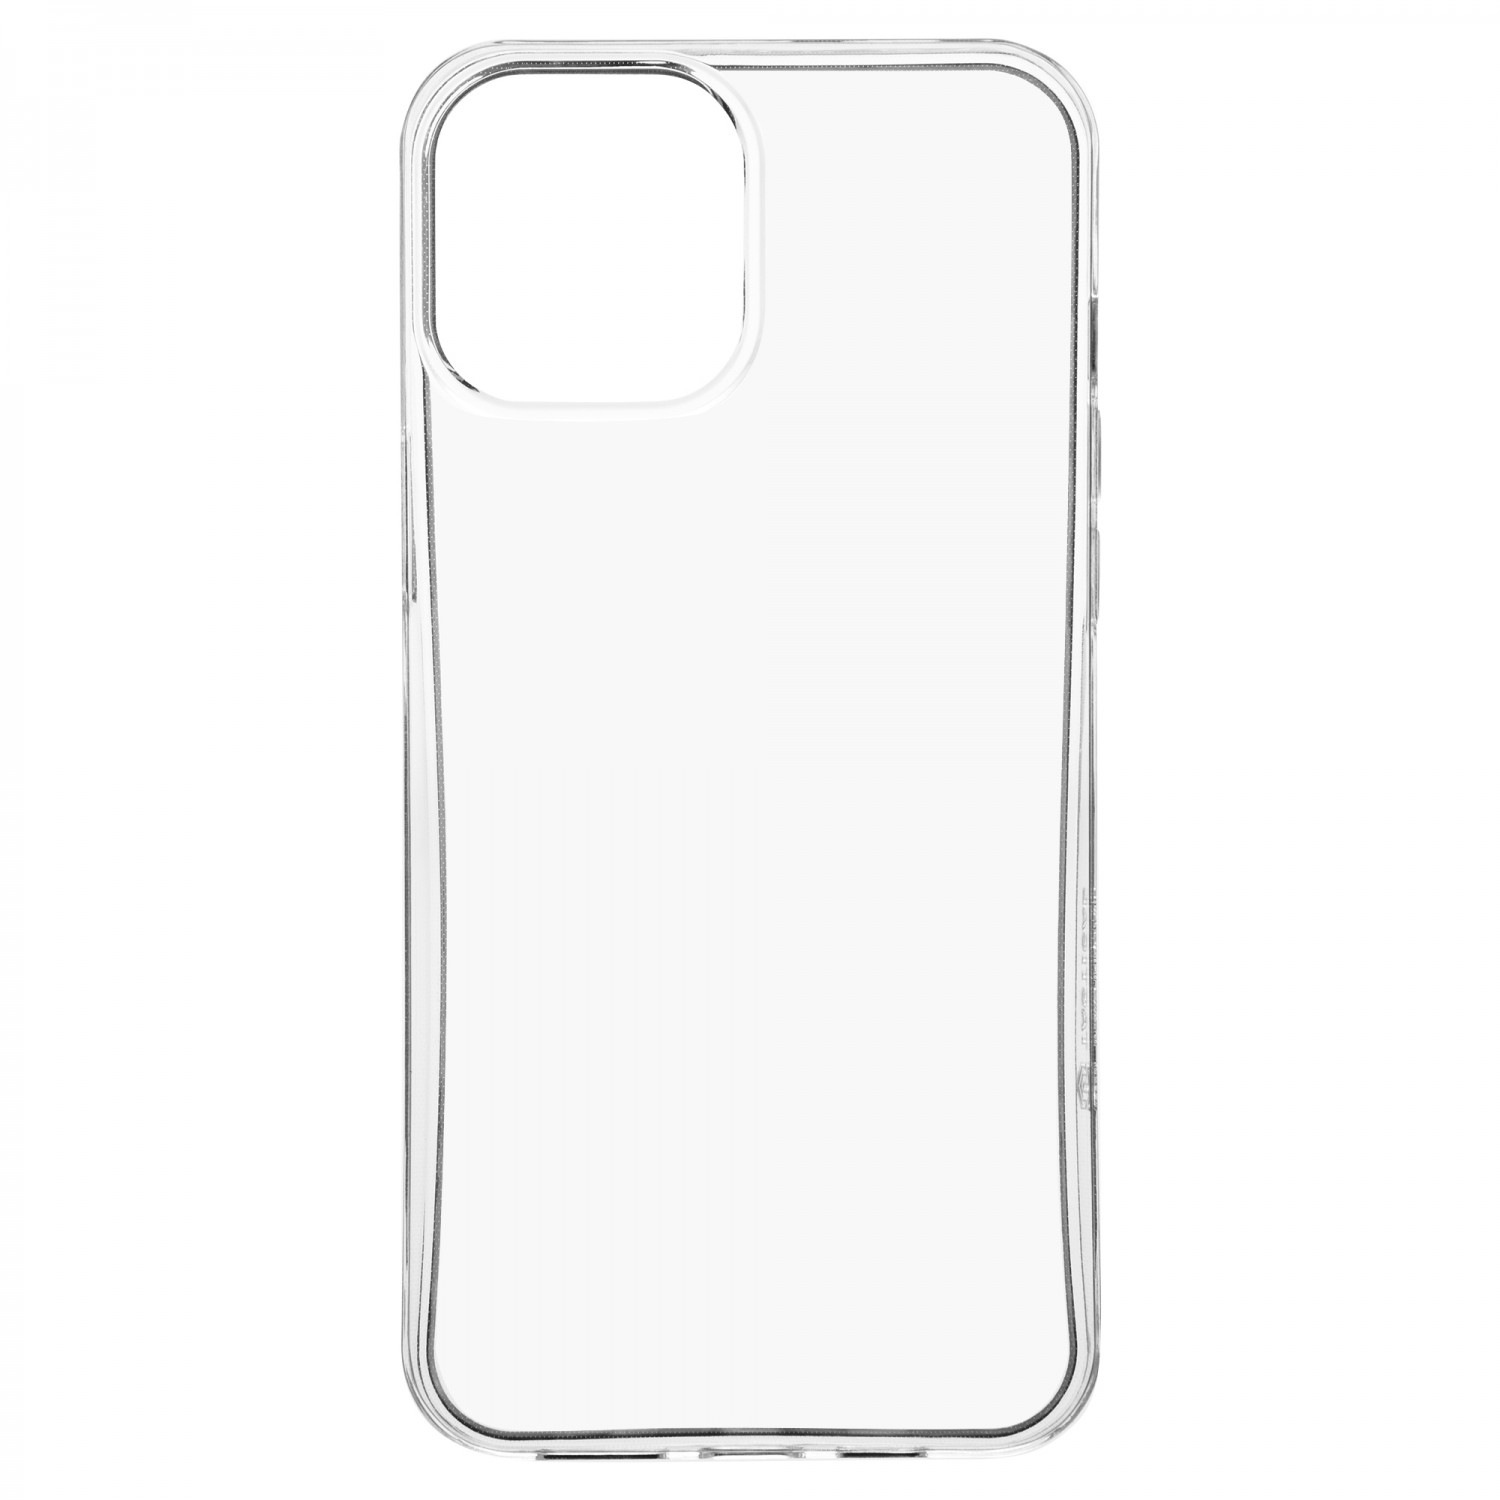 Tactical silikonové pouzdro, obal, kryt Apple iPhone 12 Pro Max transparent 